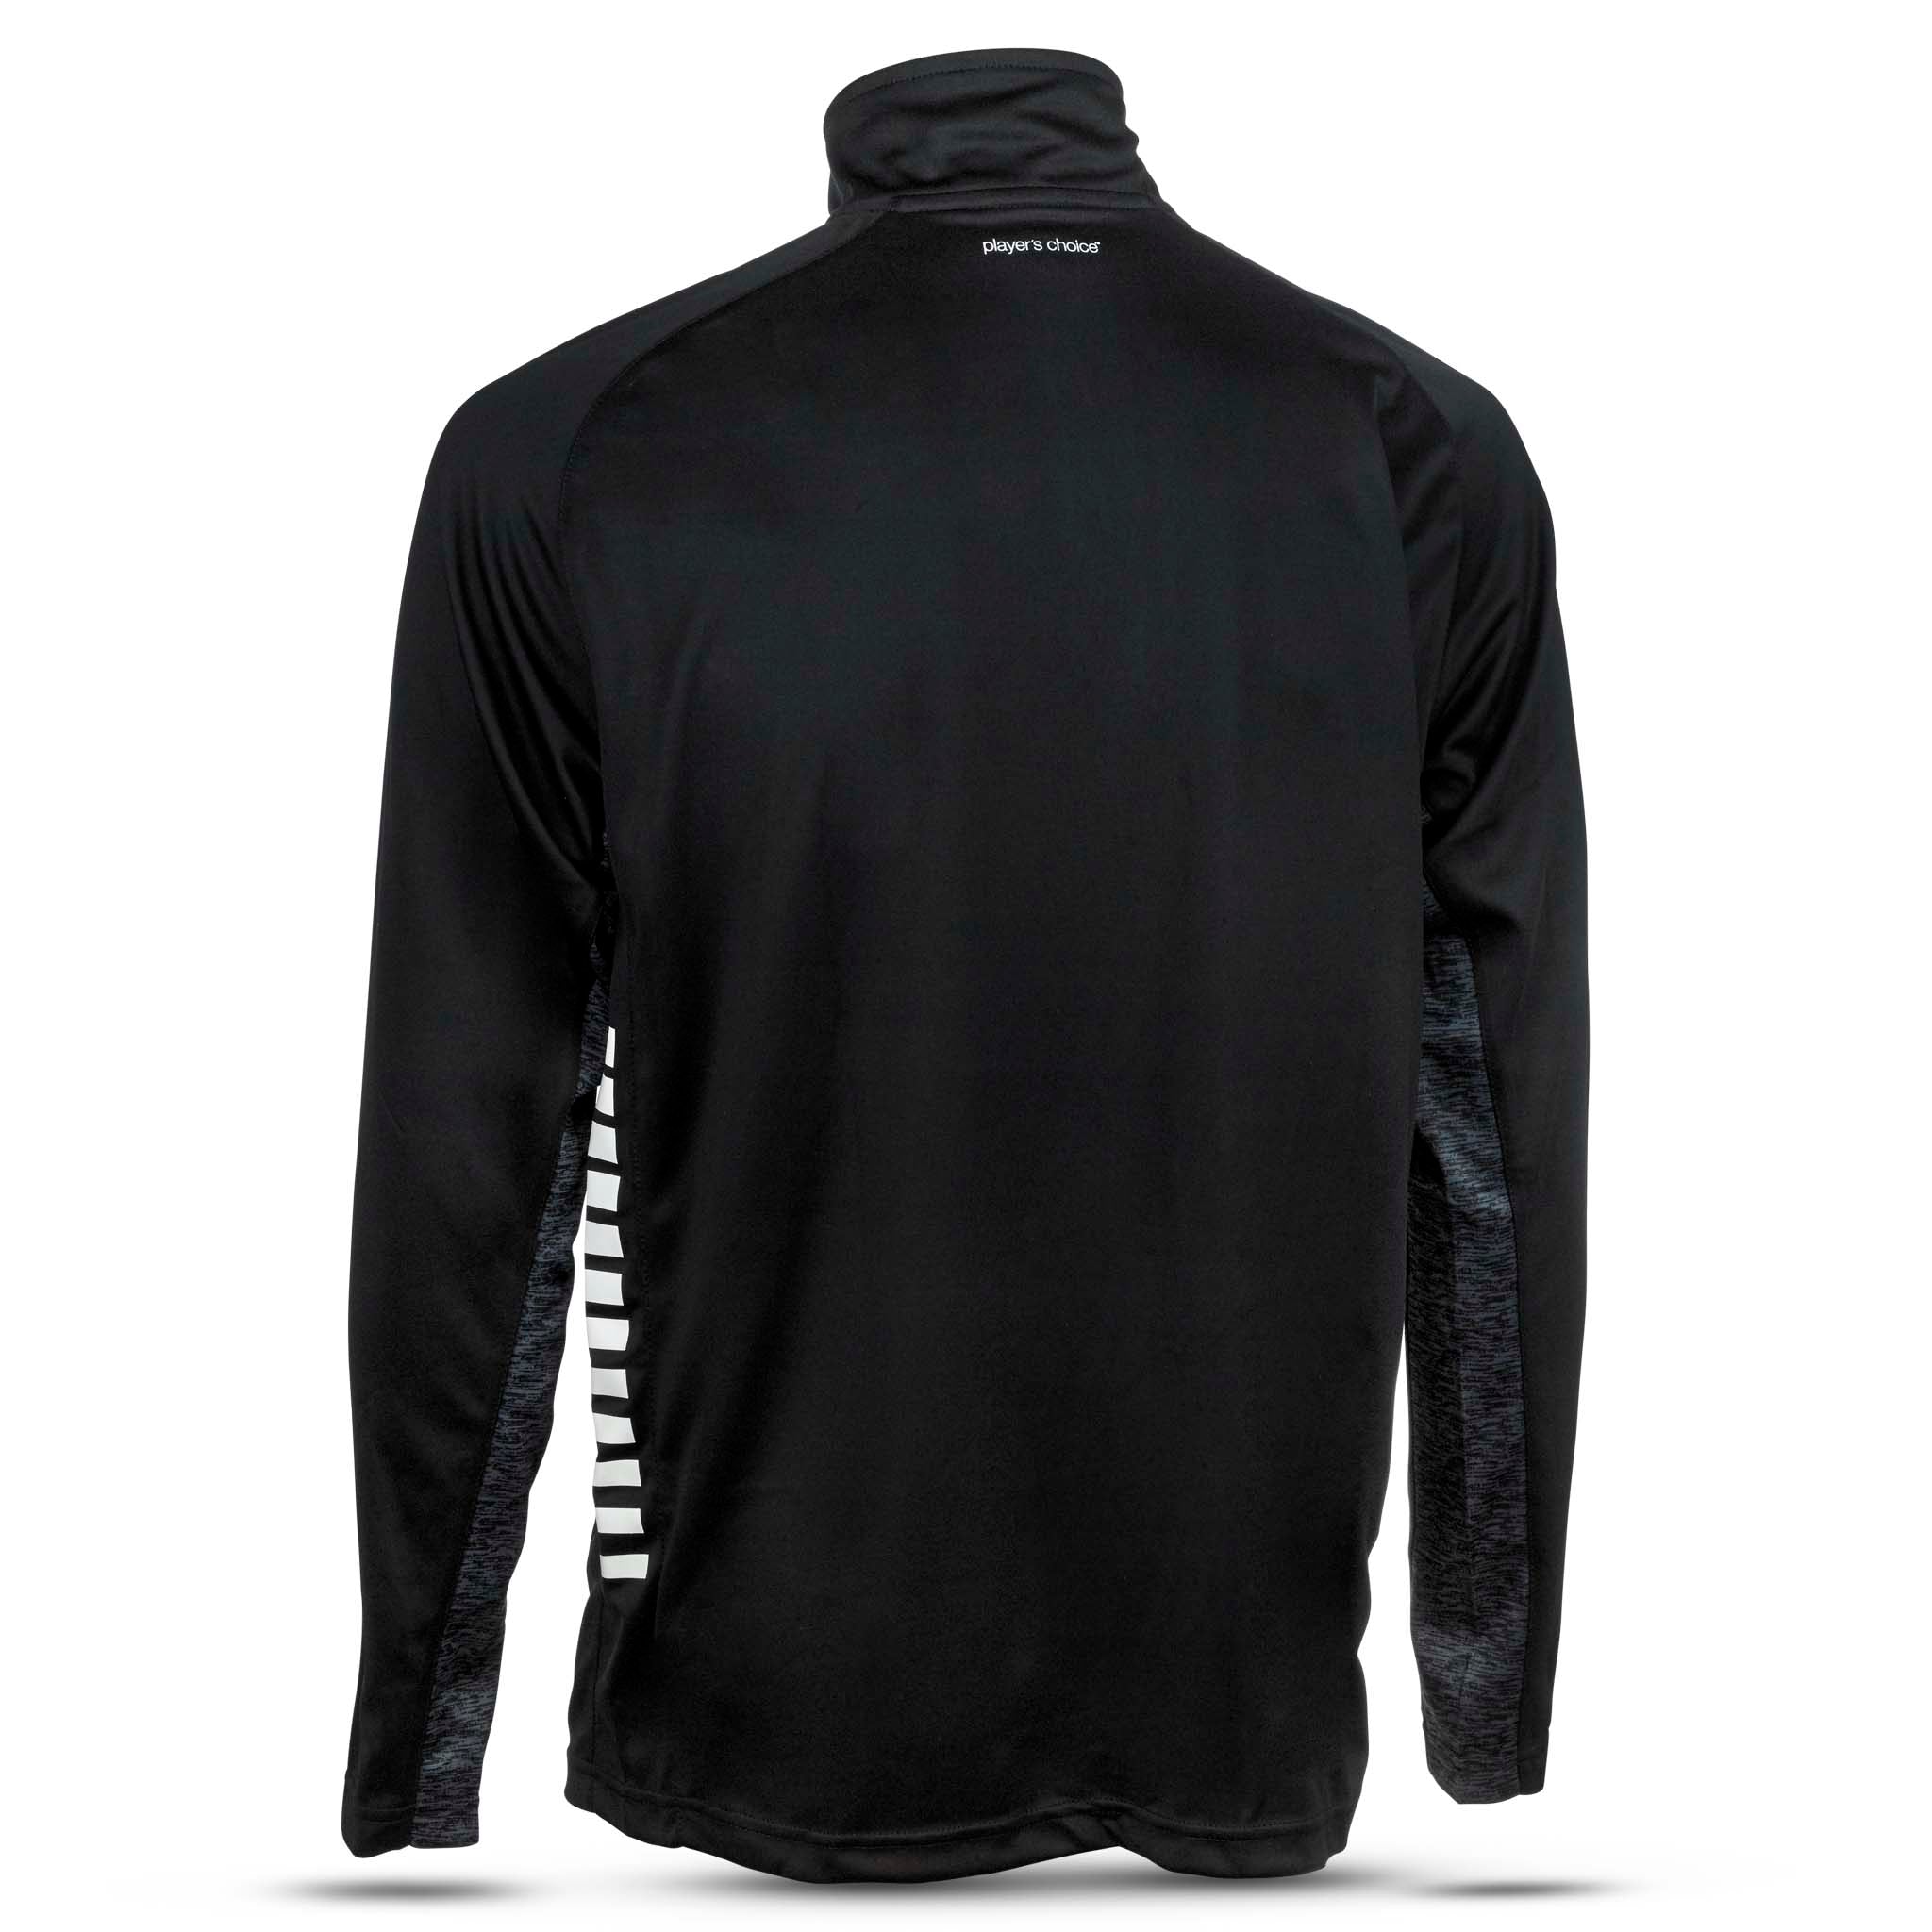 spain Träning sweatshirt 1/2 zip #färg_svart